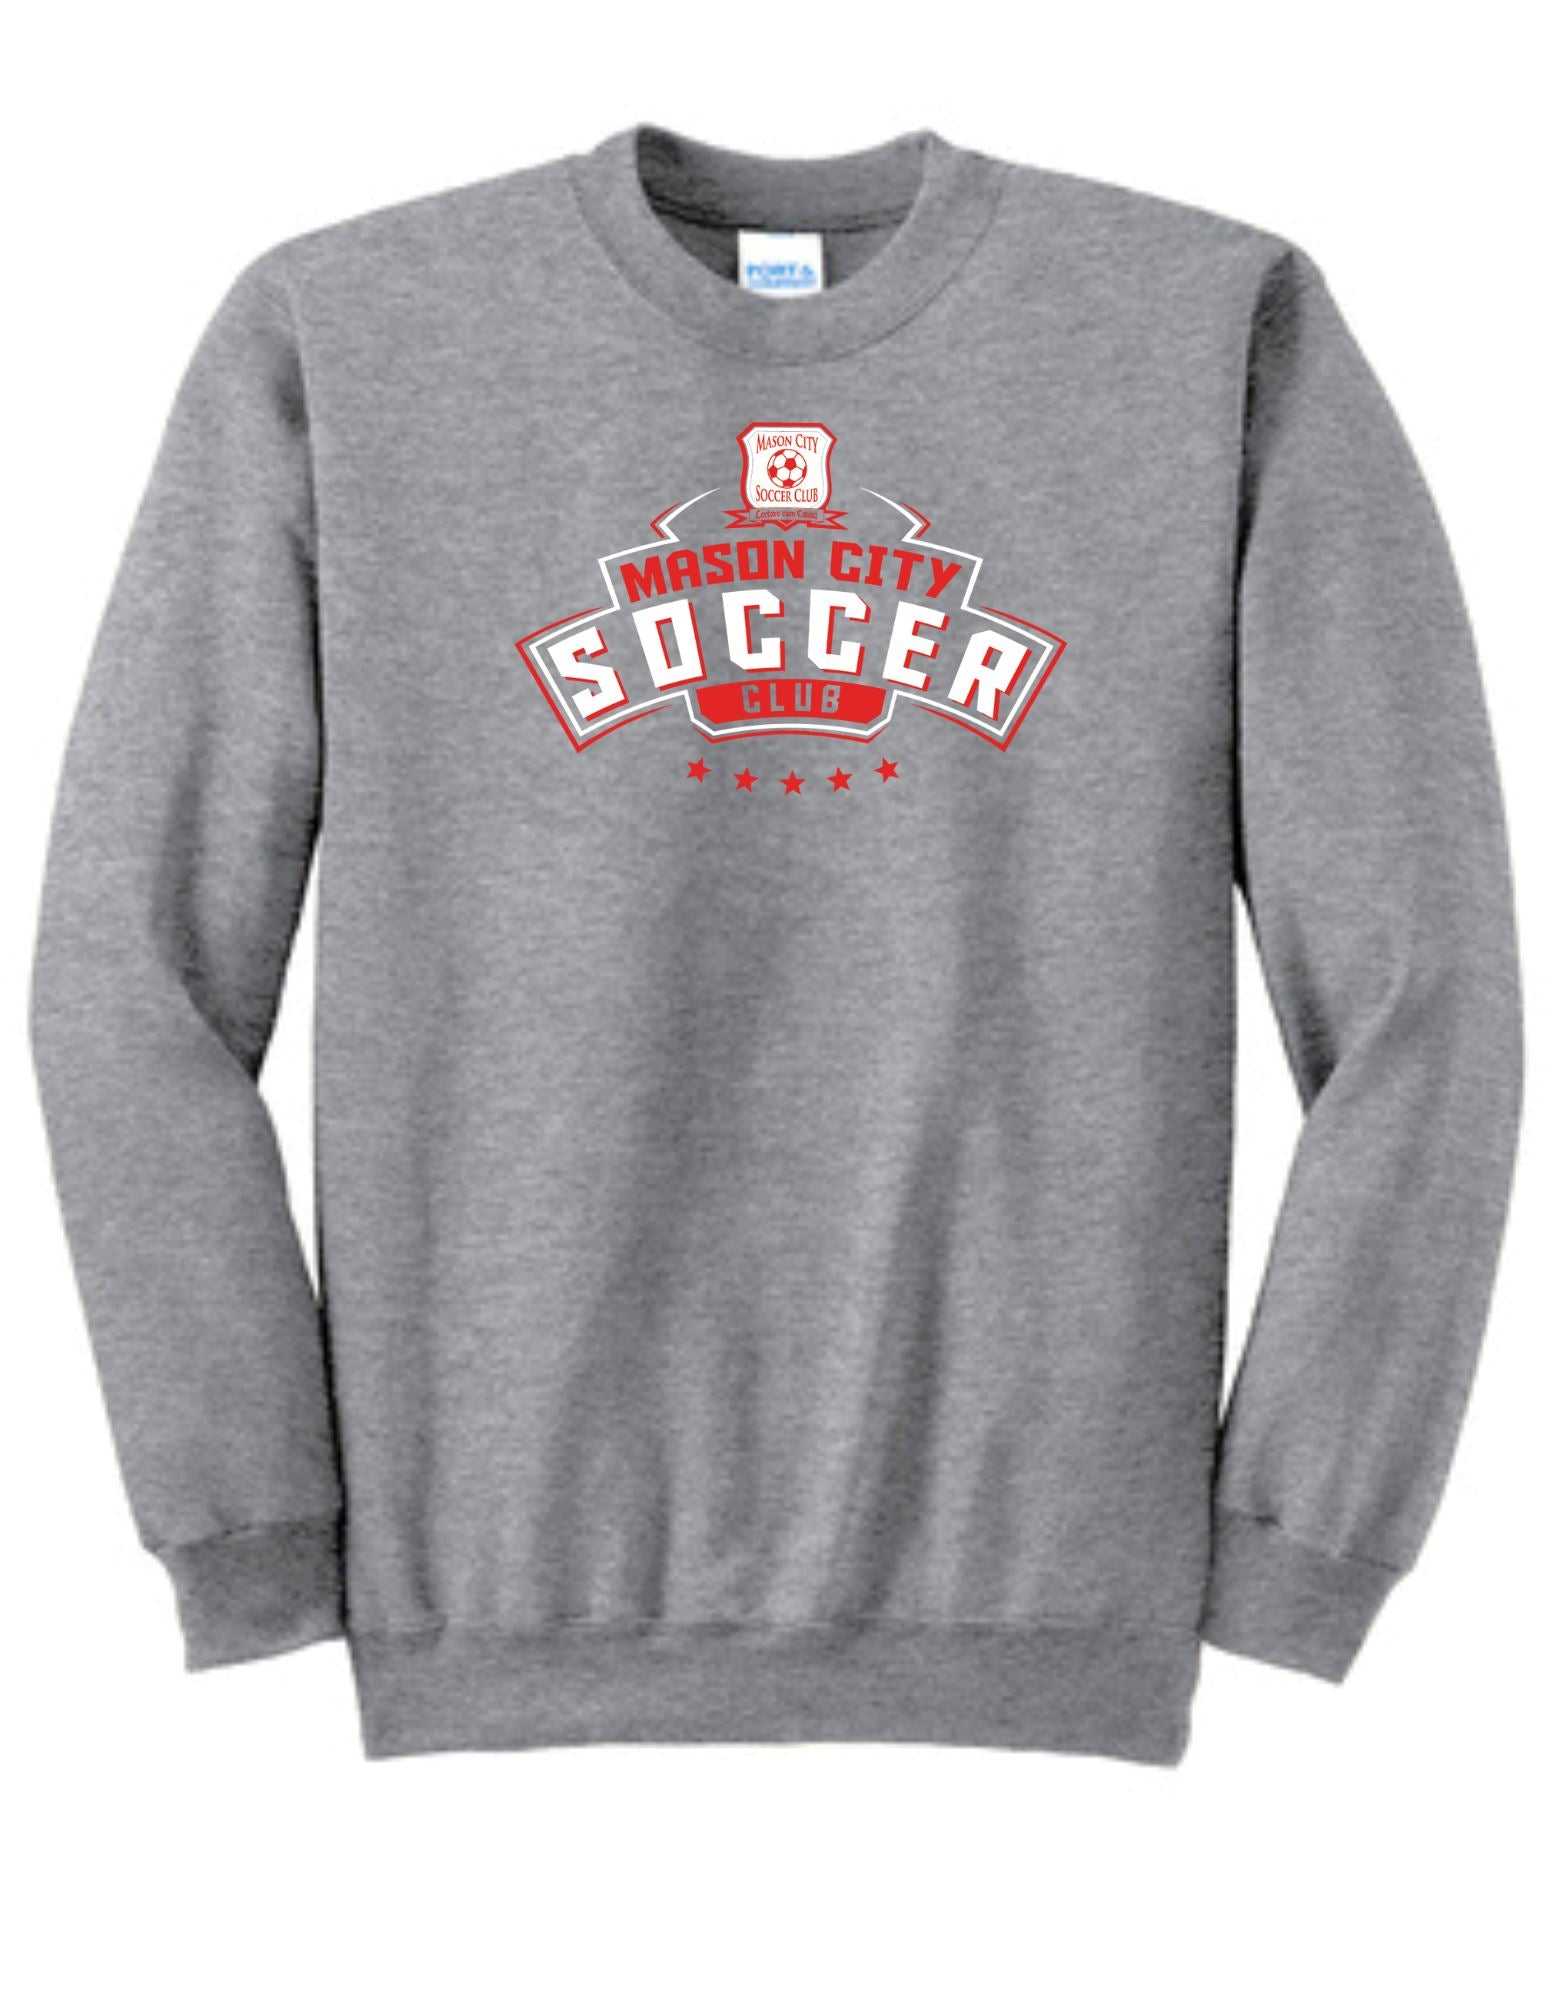 Mason City Soccer Club | Men's Crewneck Sweatshirt T-Shirt Goal Kick Soccer Small Sport Grey 